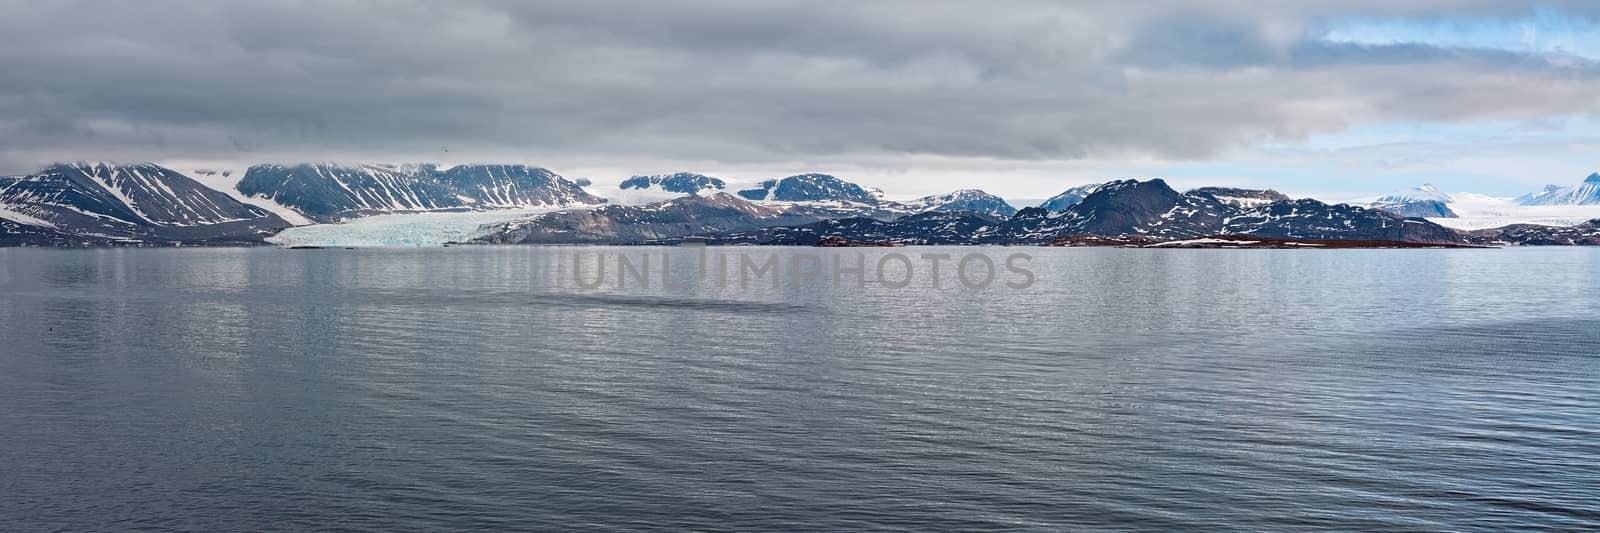 Mountain range and glacier in Svalbard islands by LuigiMorbidelli